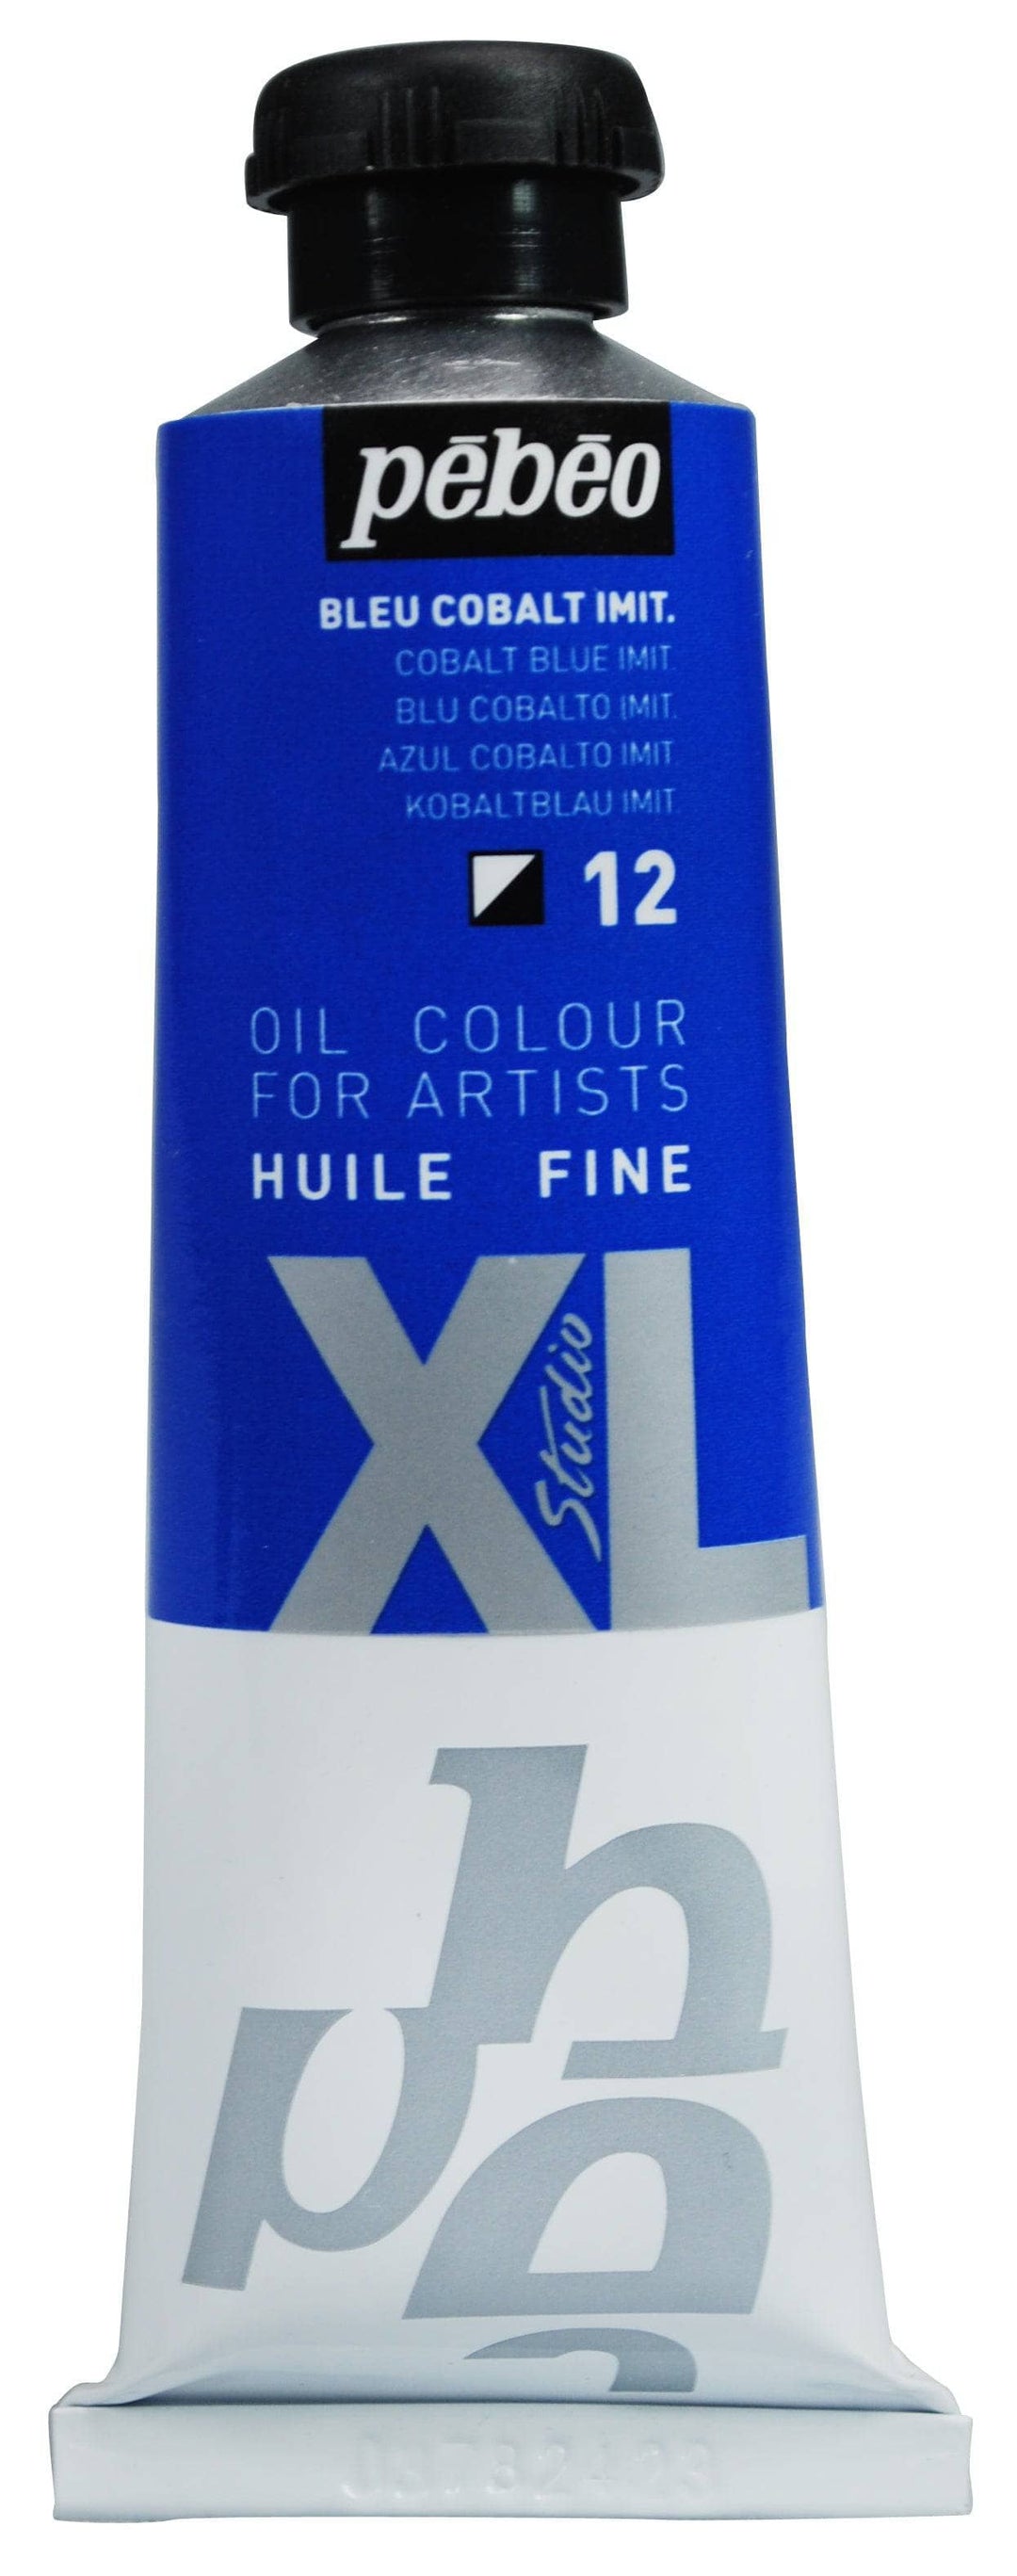 Huile fine Studio XL 37ml - Bleu Cobalt Imit.
PB937012